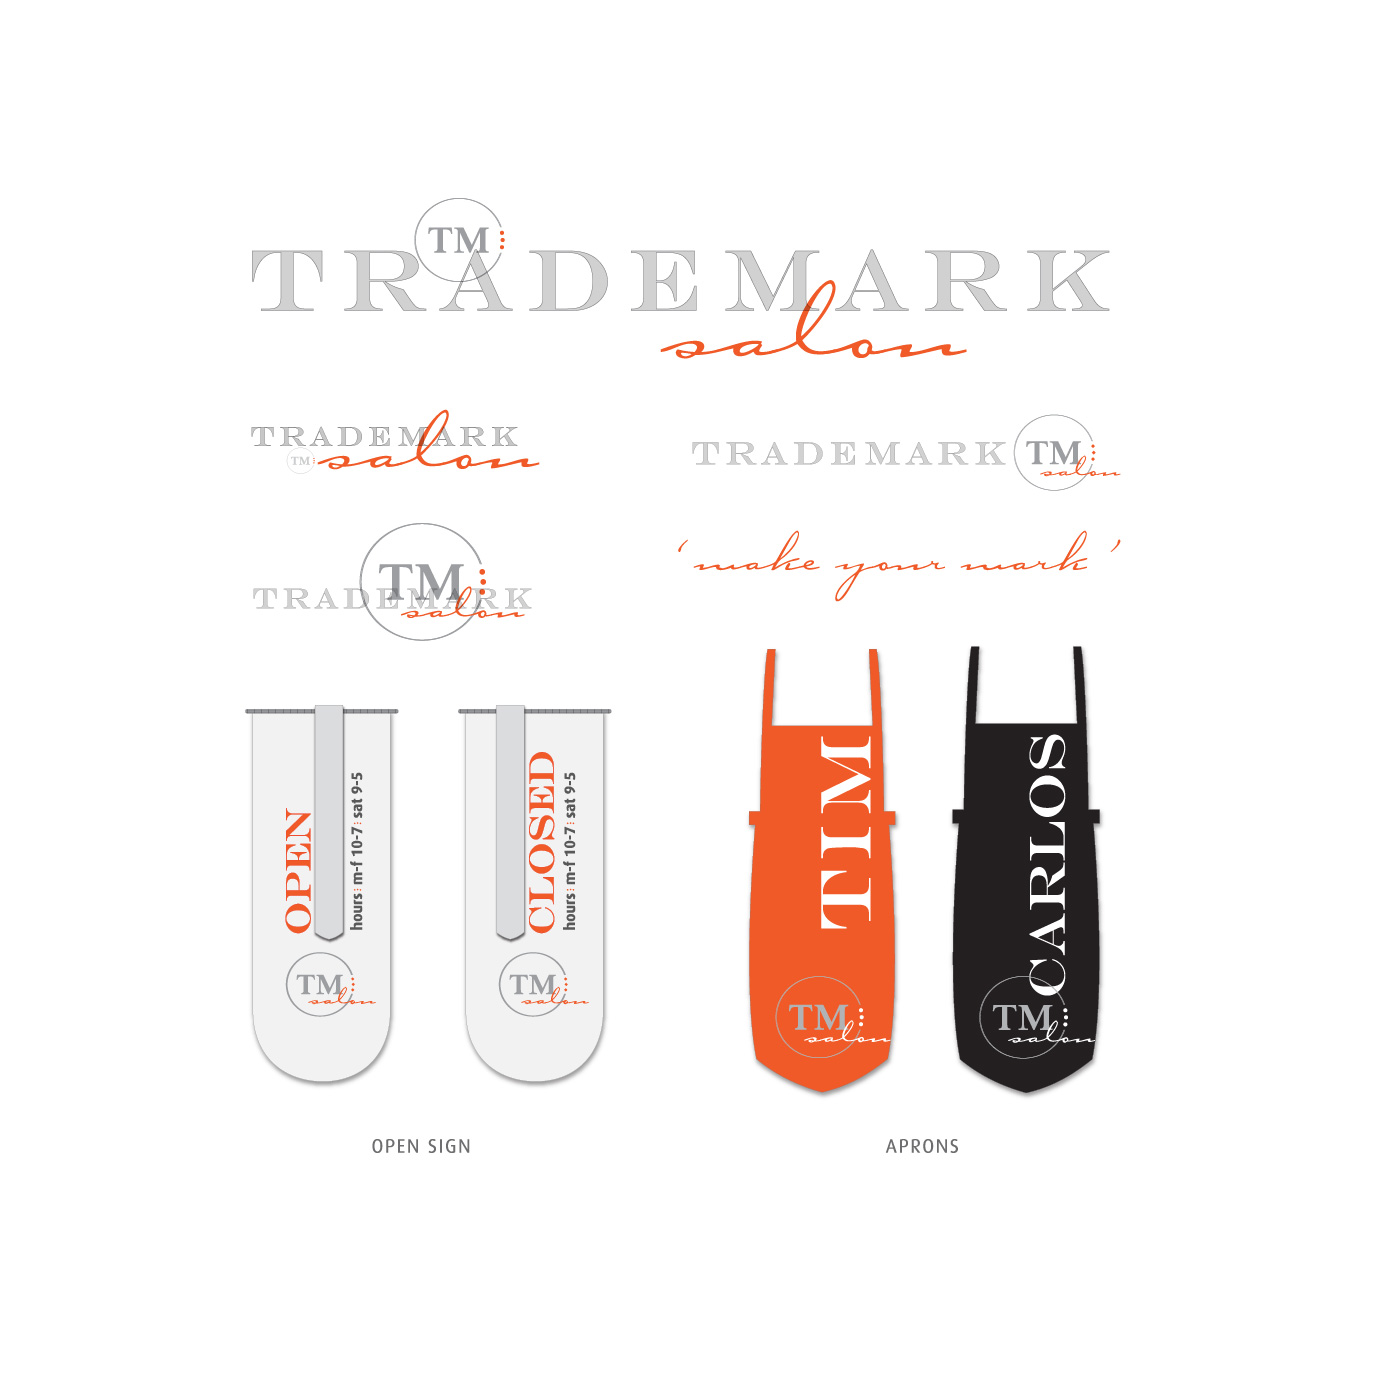 Trademark Salon logo